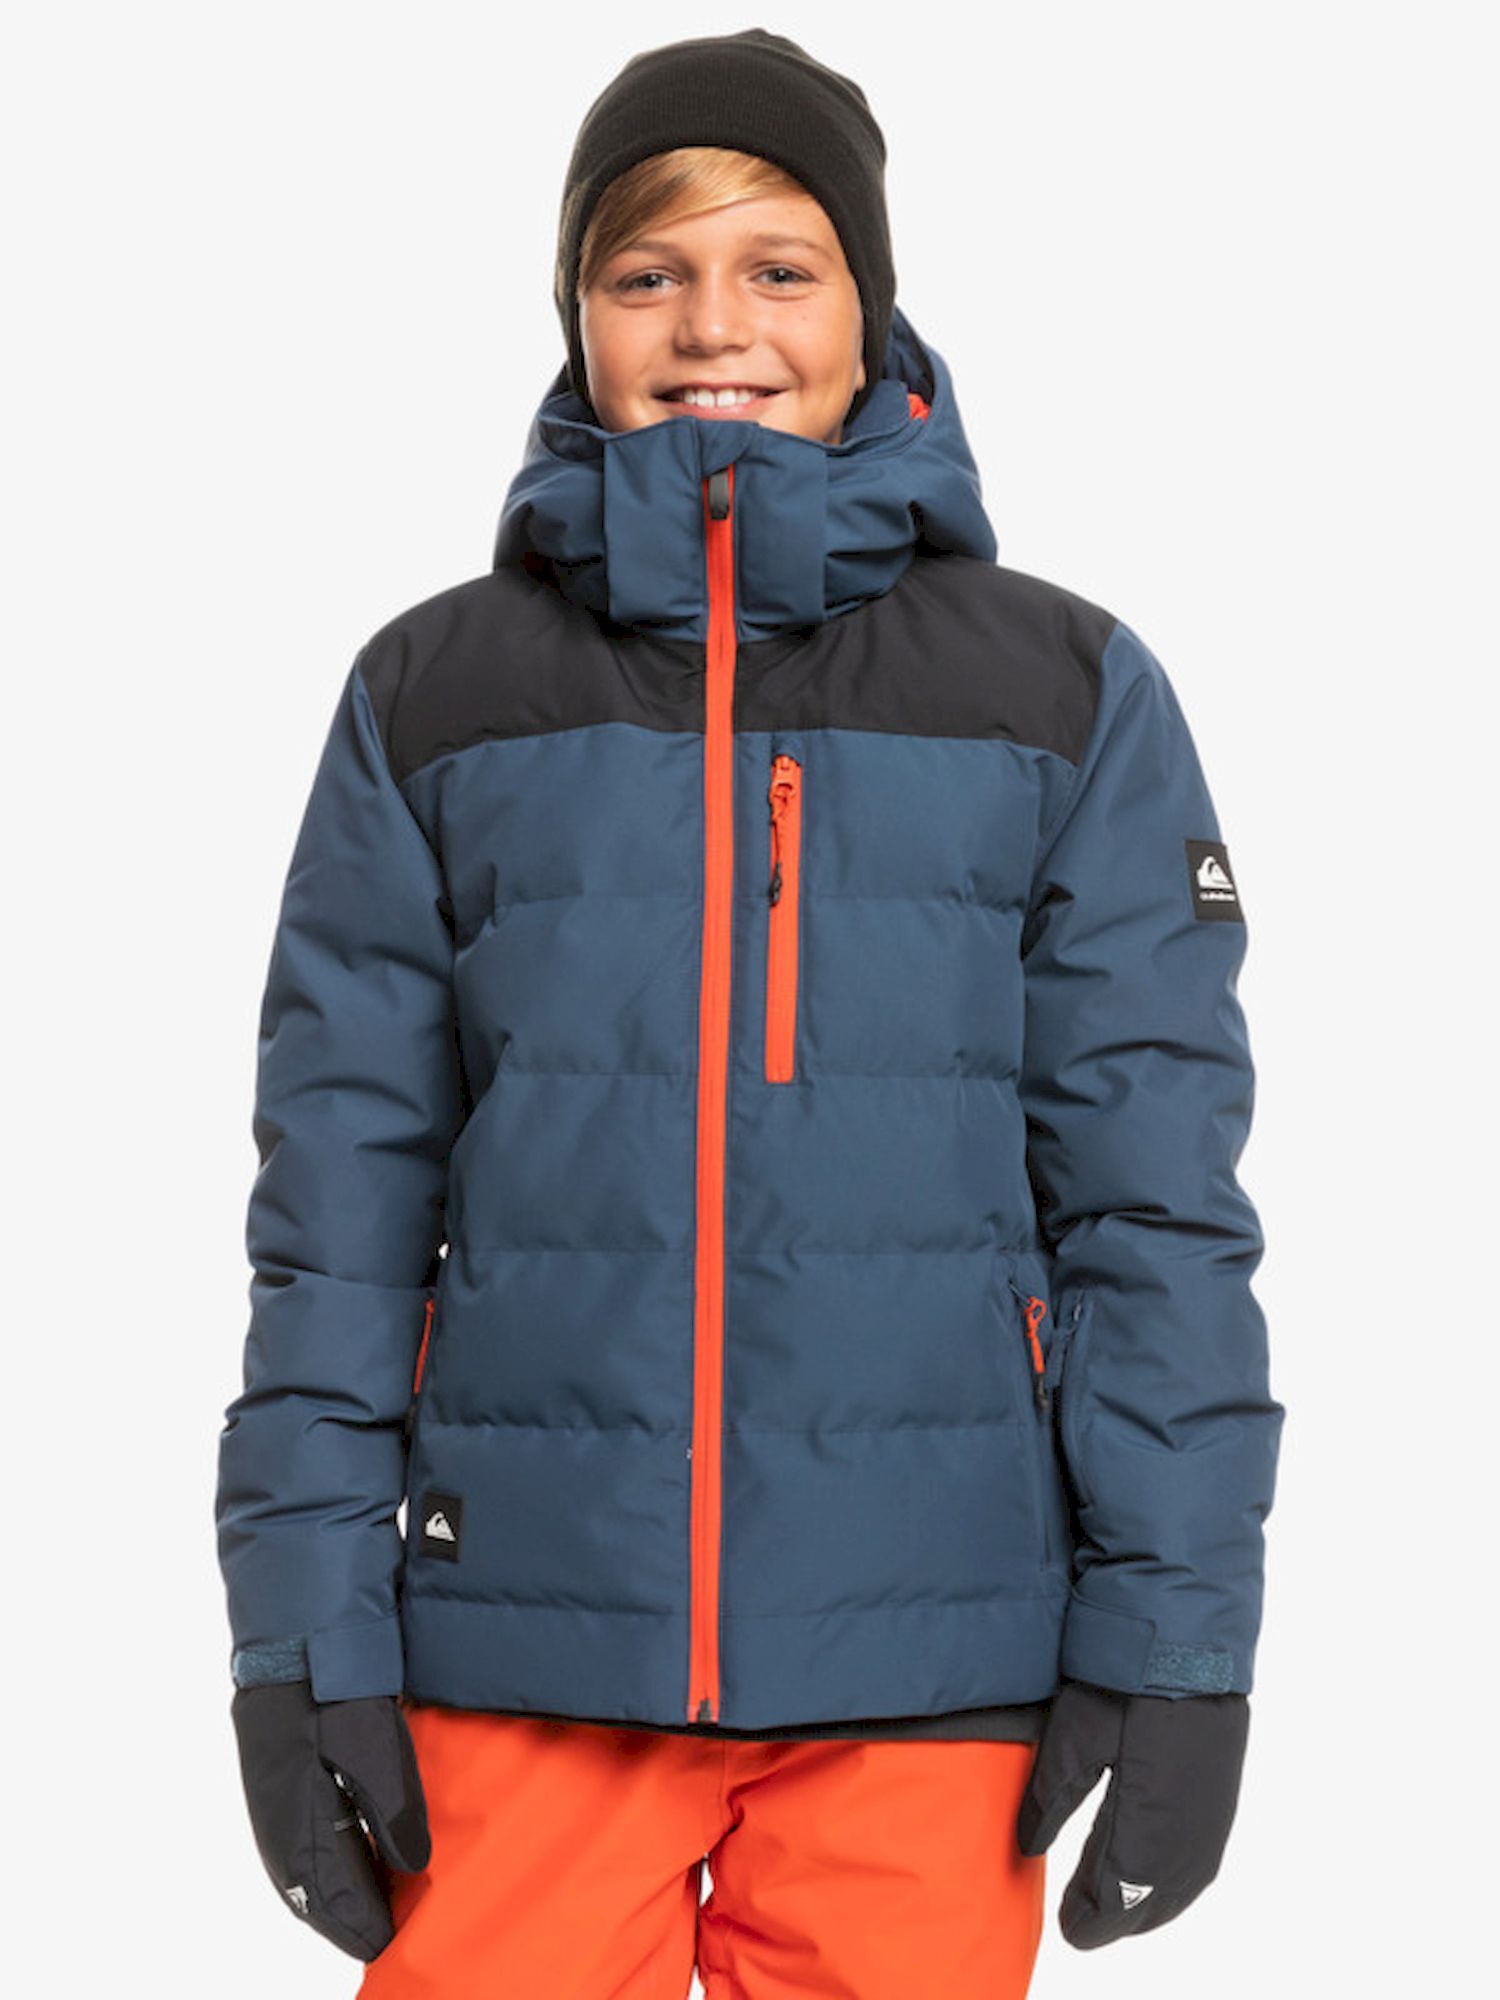 Quiksilver The Edge Youth Jacket - Veste ski enfant | Hardloop